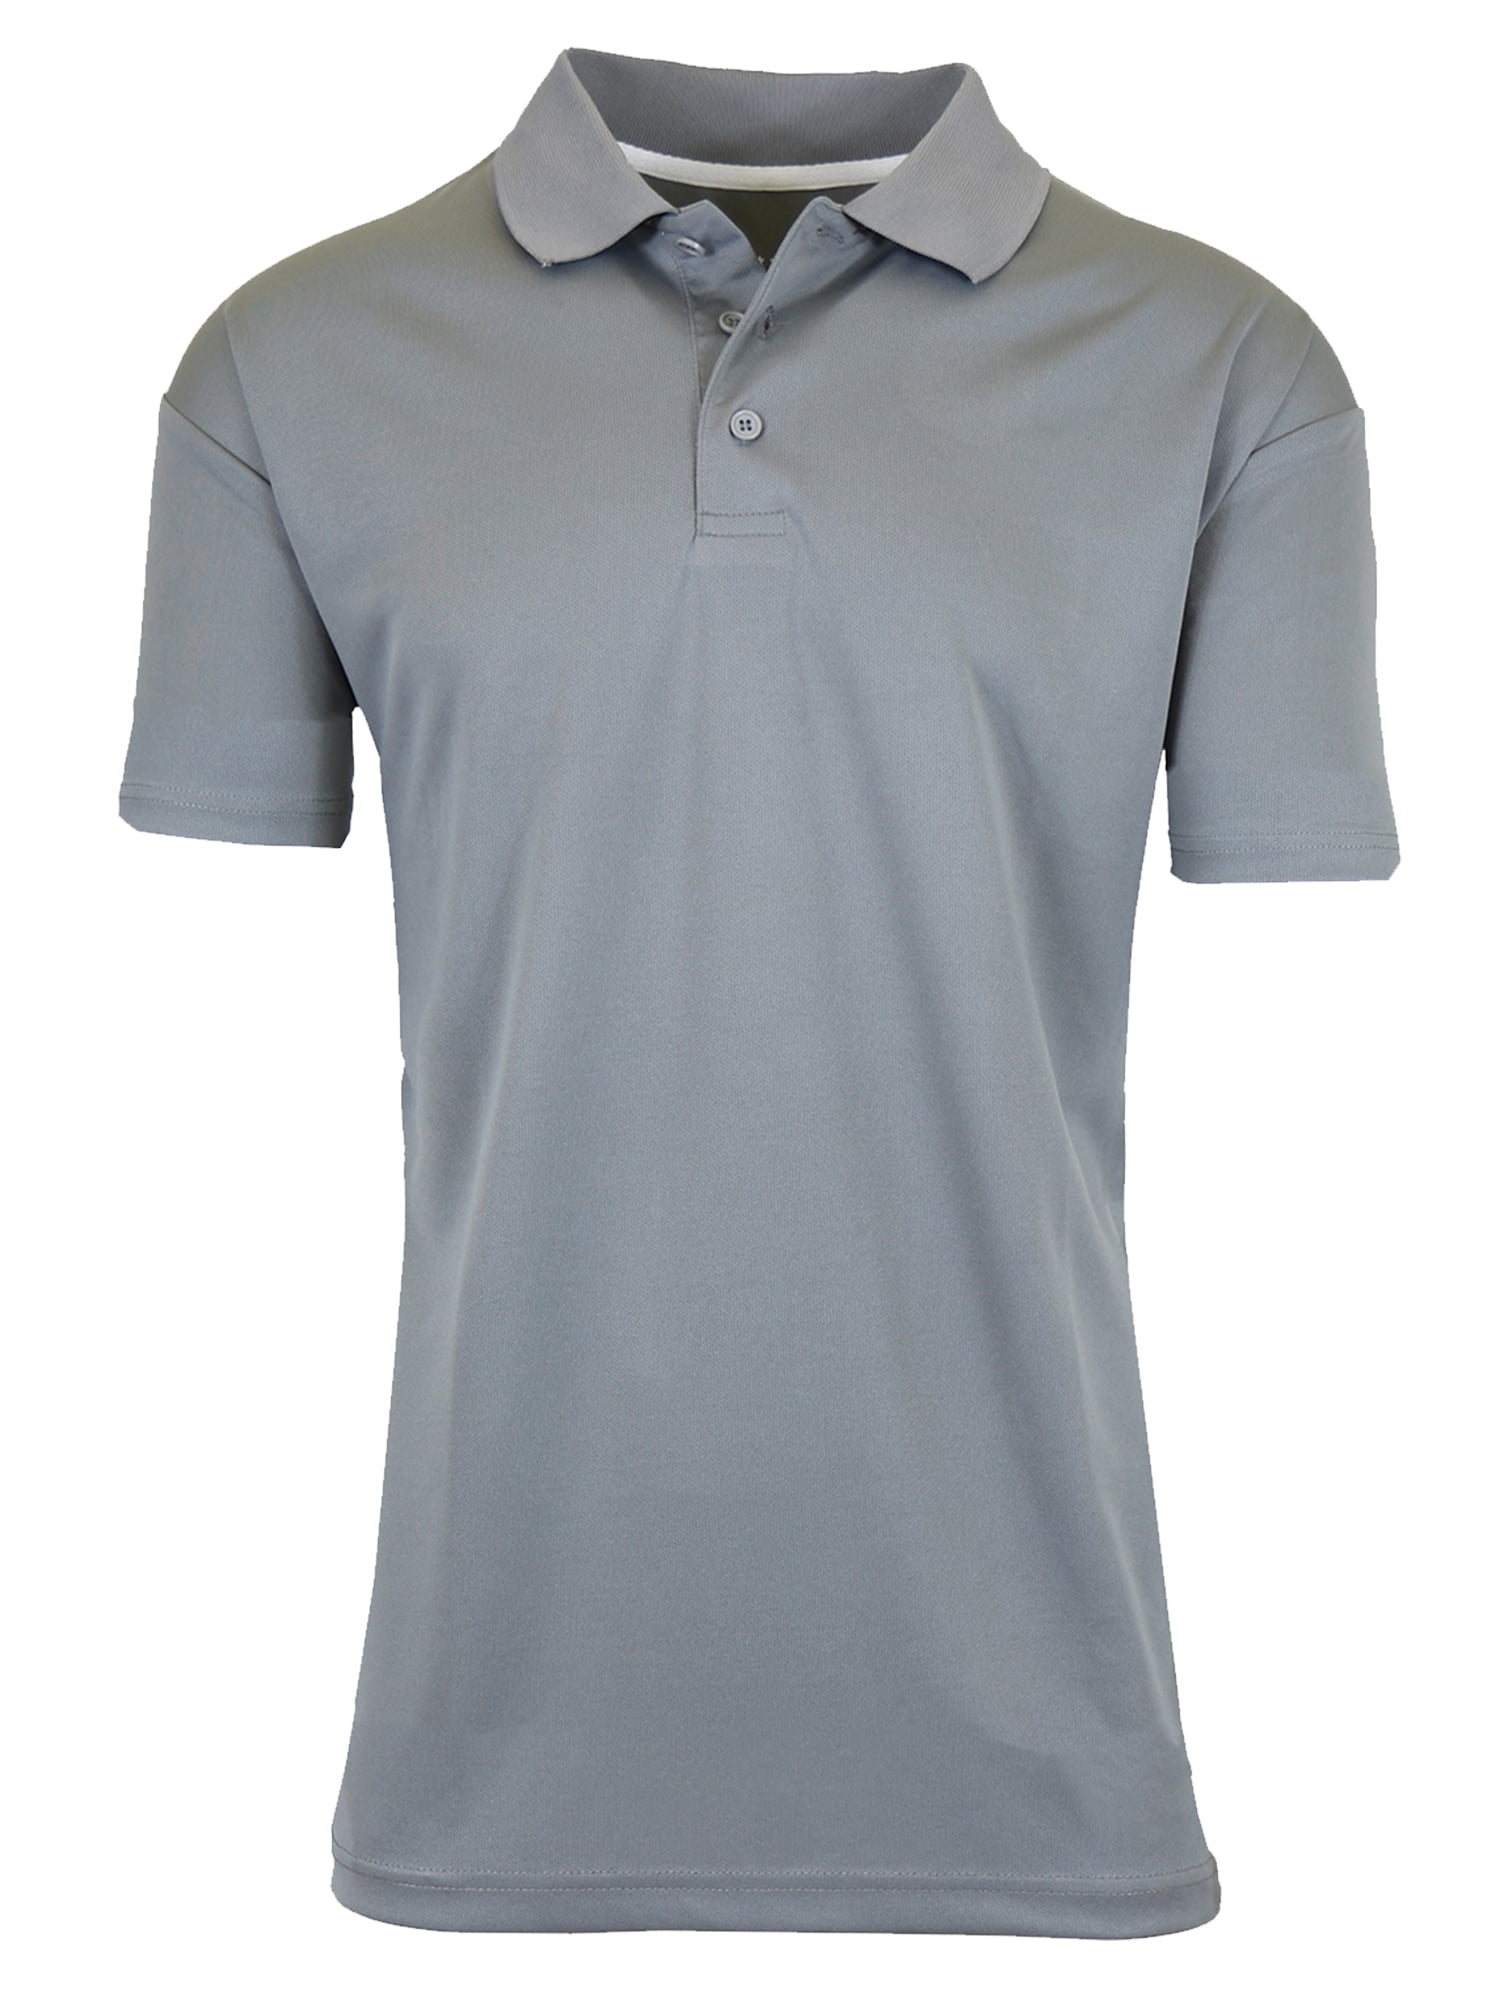 Men's Dry Fit Moisture-Wicking Polo Shirt - Walmart.com